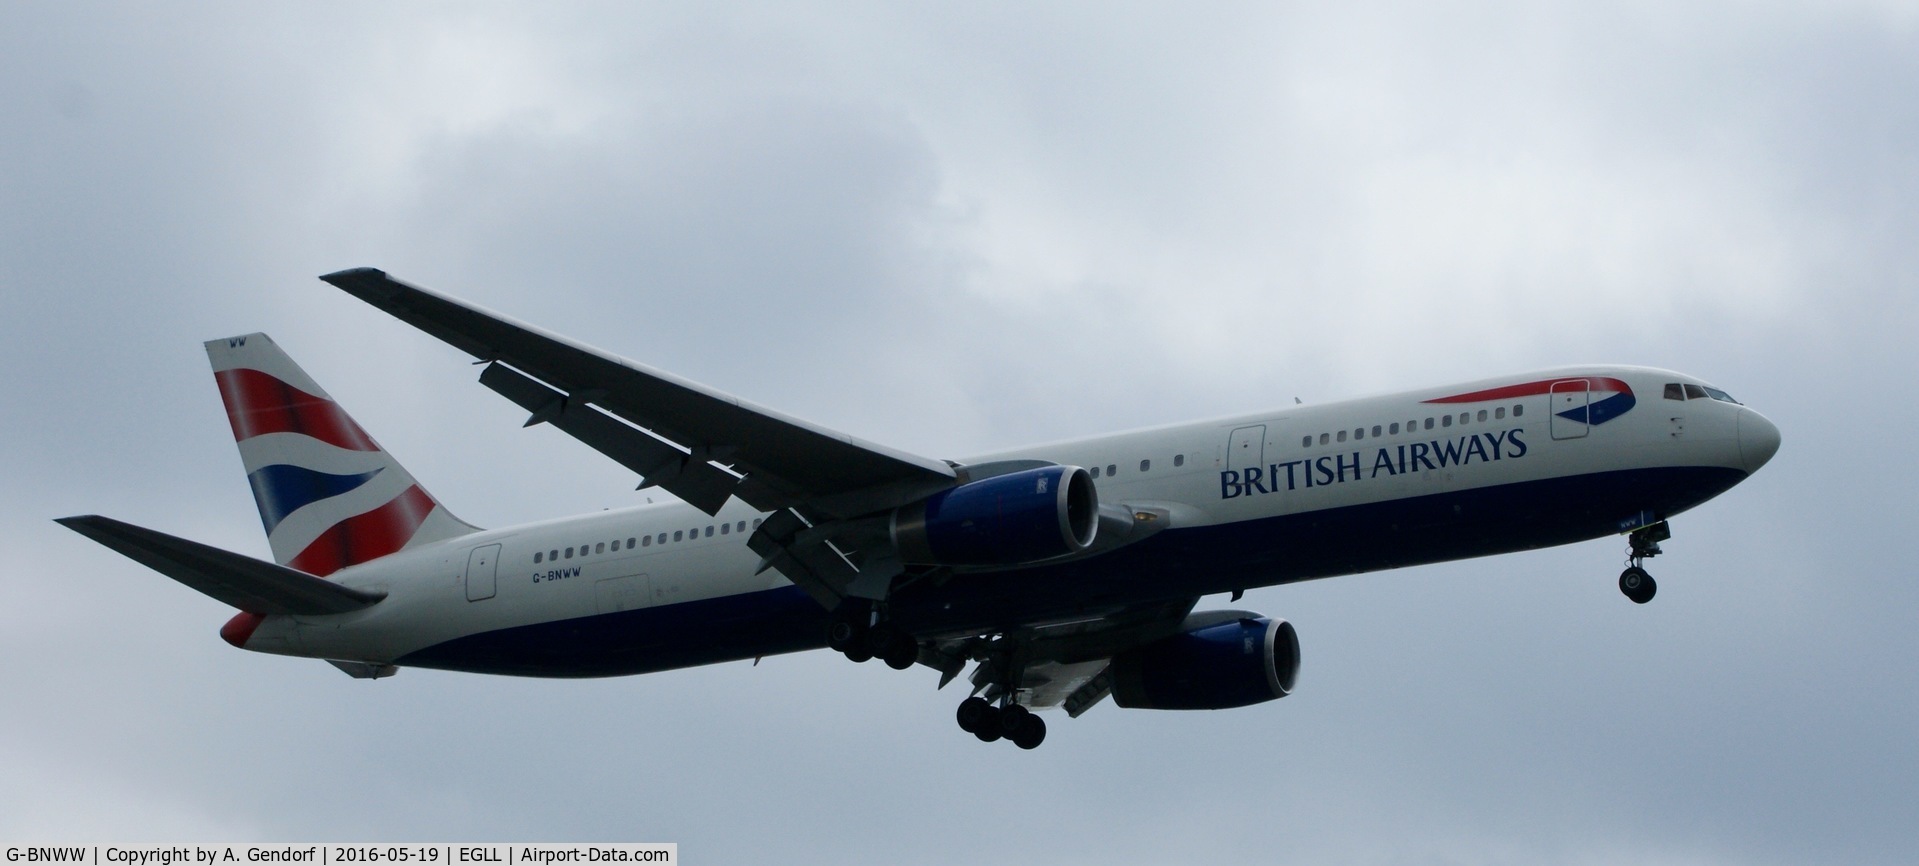 G-BNWW, 1993 Boeing 767-336/ER C/N 25831, British Airways, is here on finals RWY 27R at London Heathrow(EGLL)